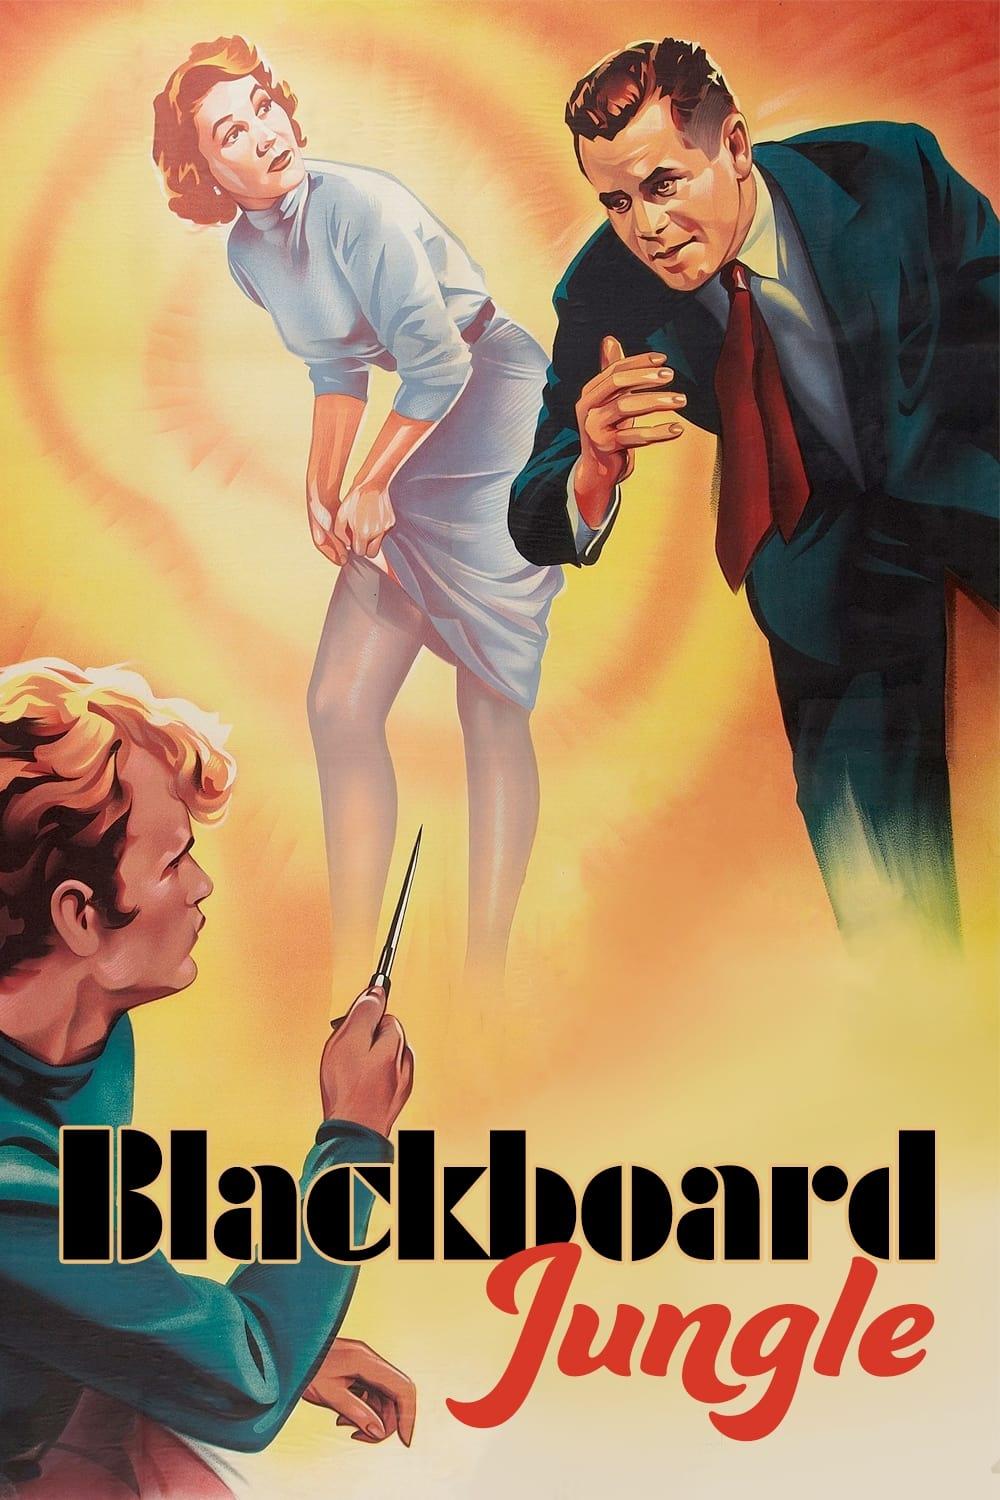 Blackboard Jungle poster